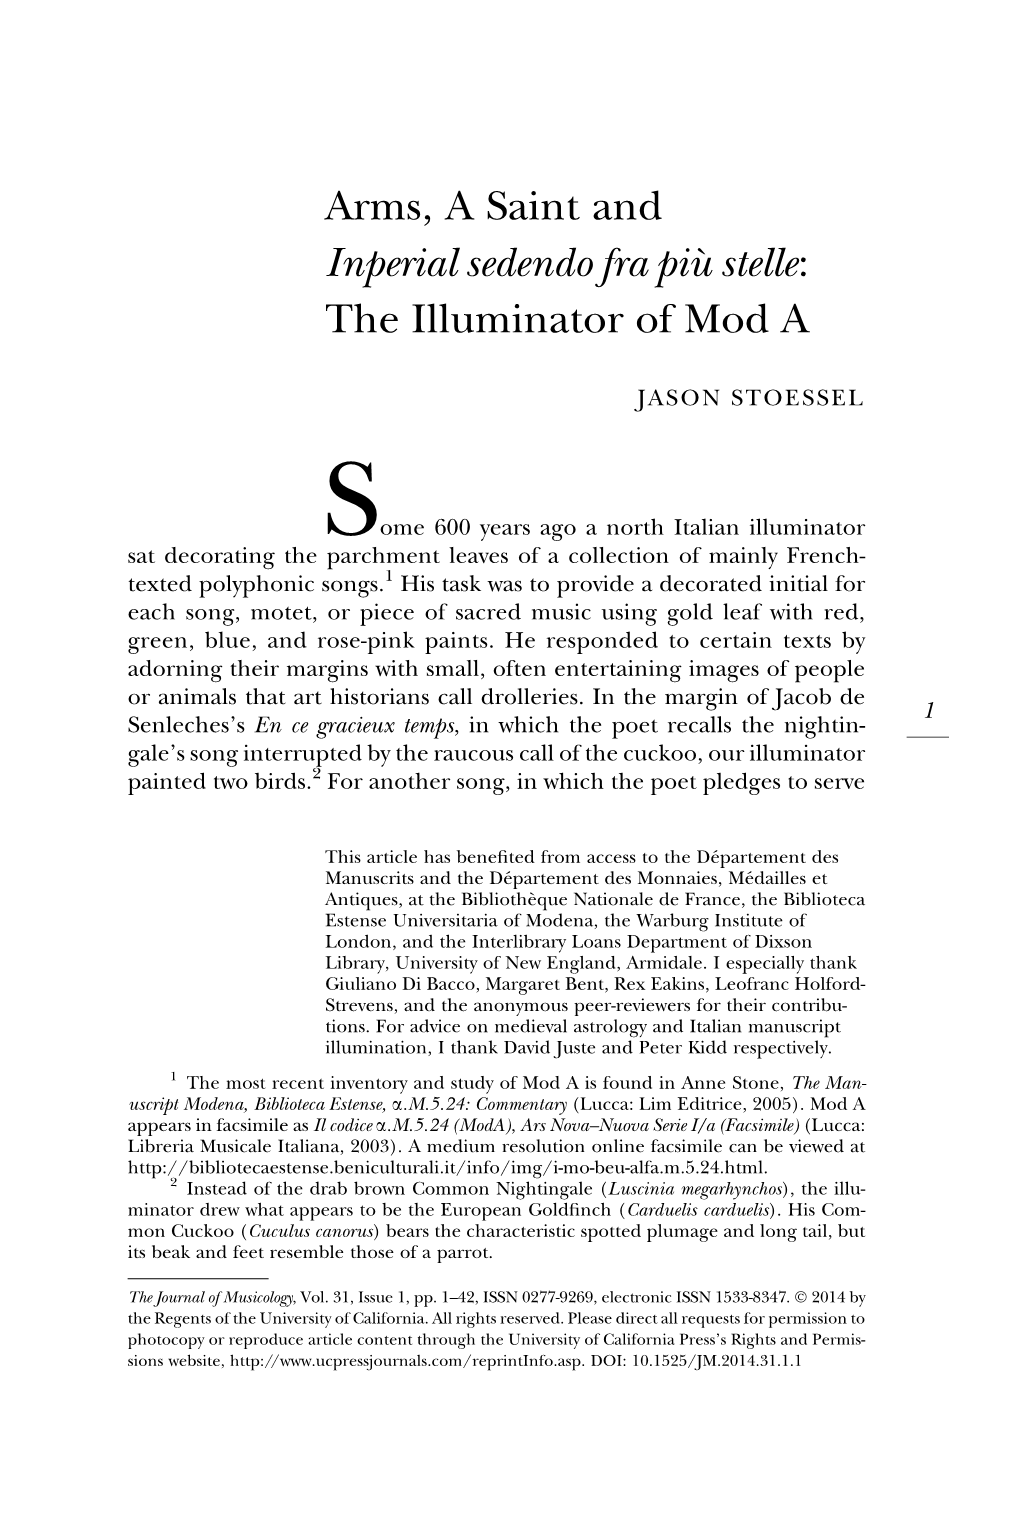 Arms, a Saint and Inperial Sedendo Fra Piu` Stelle: the Illuminator of Mod A